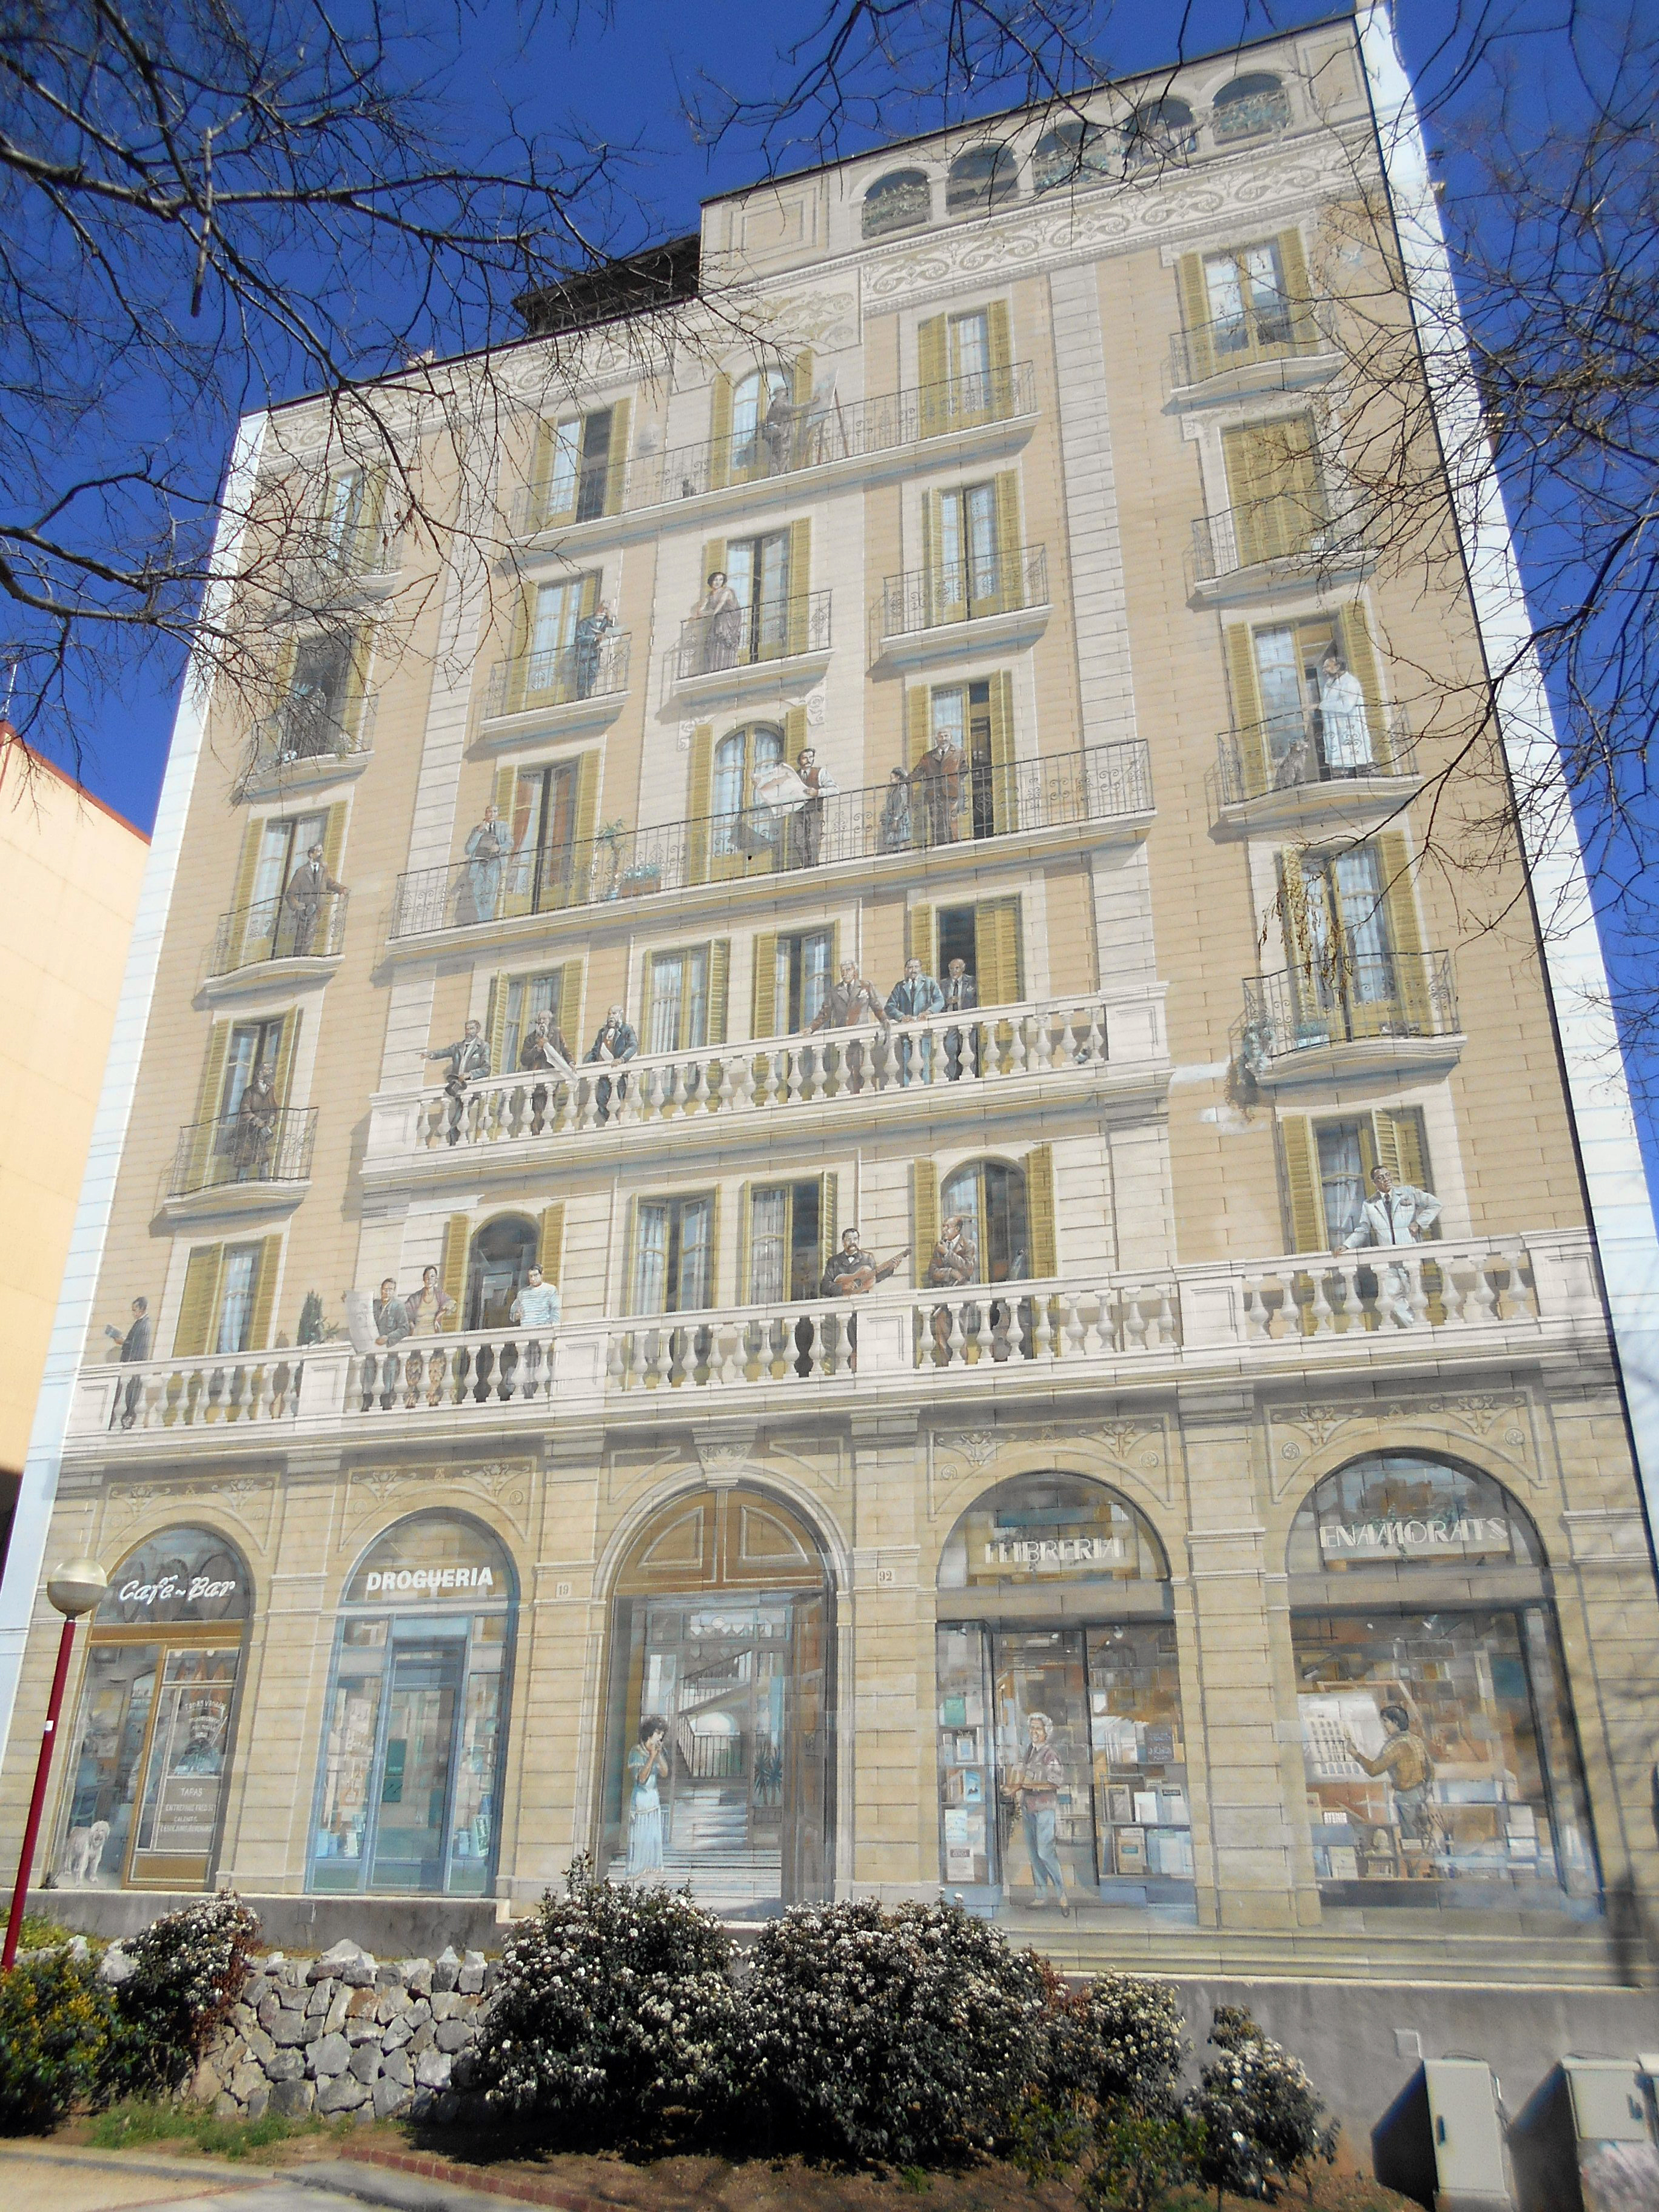 where to see street art in Barcelona - Balcons de Barcelona